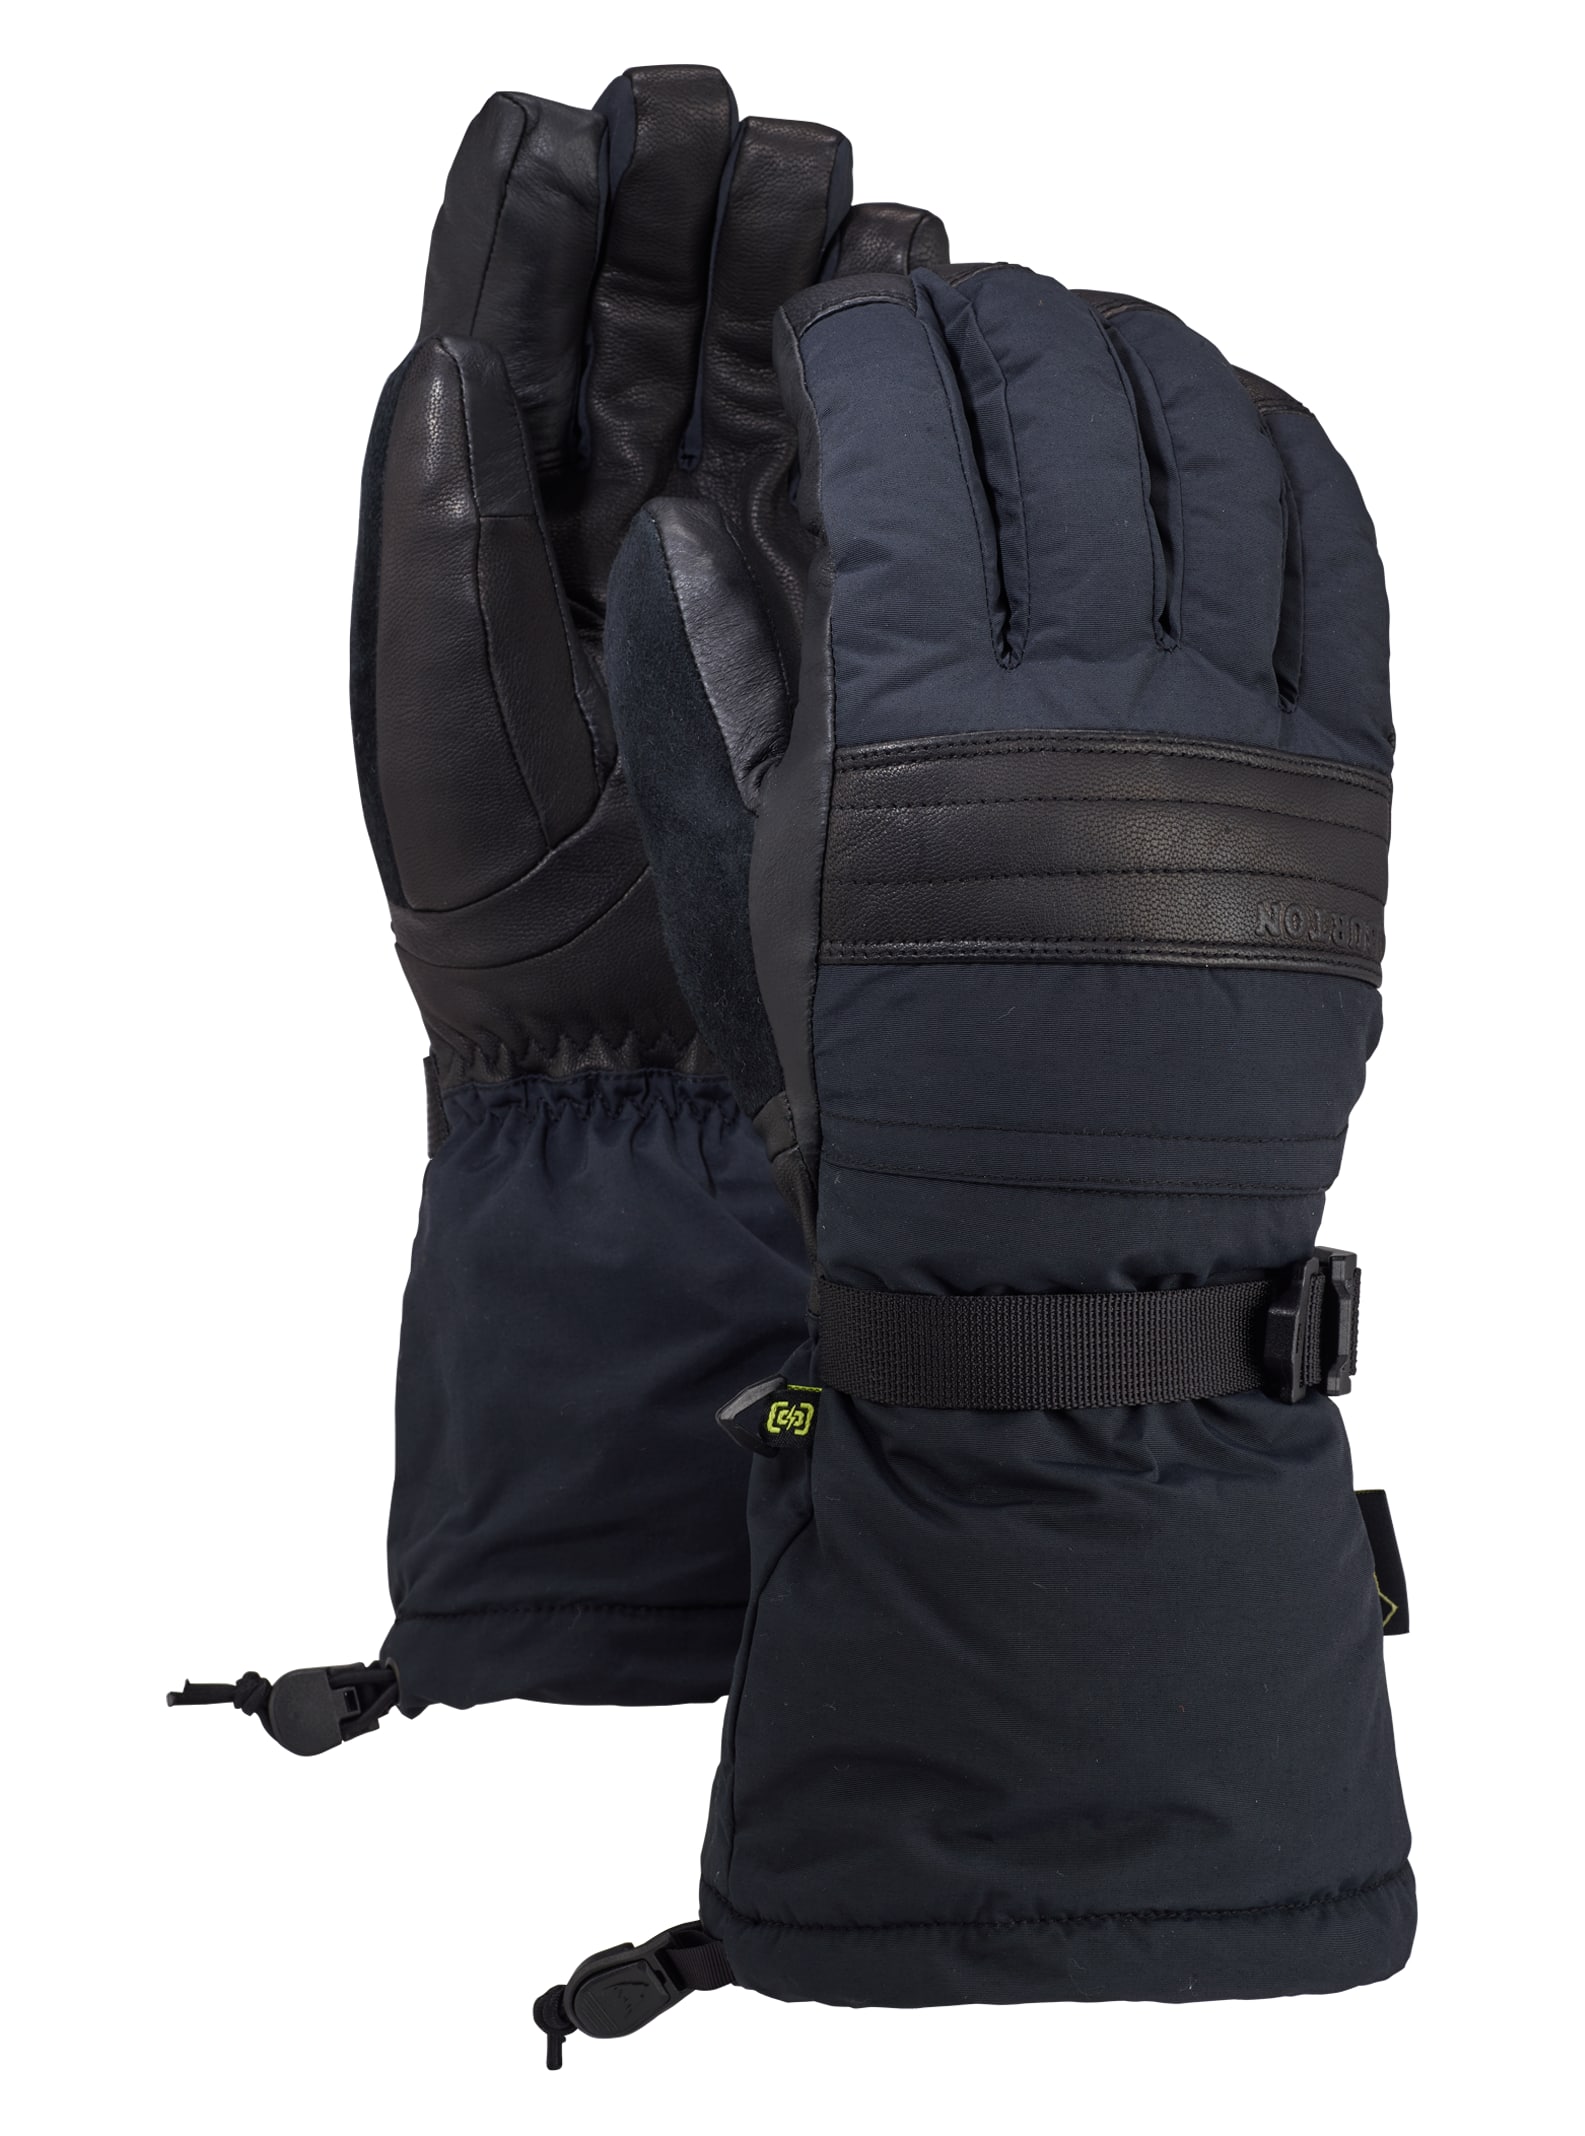 Men's Burton GORE-TEX Warmest Glove | Burton.com Winter 2022 US